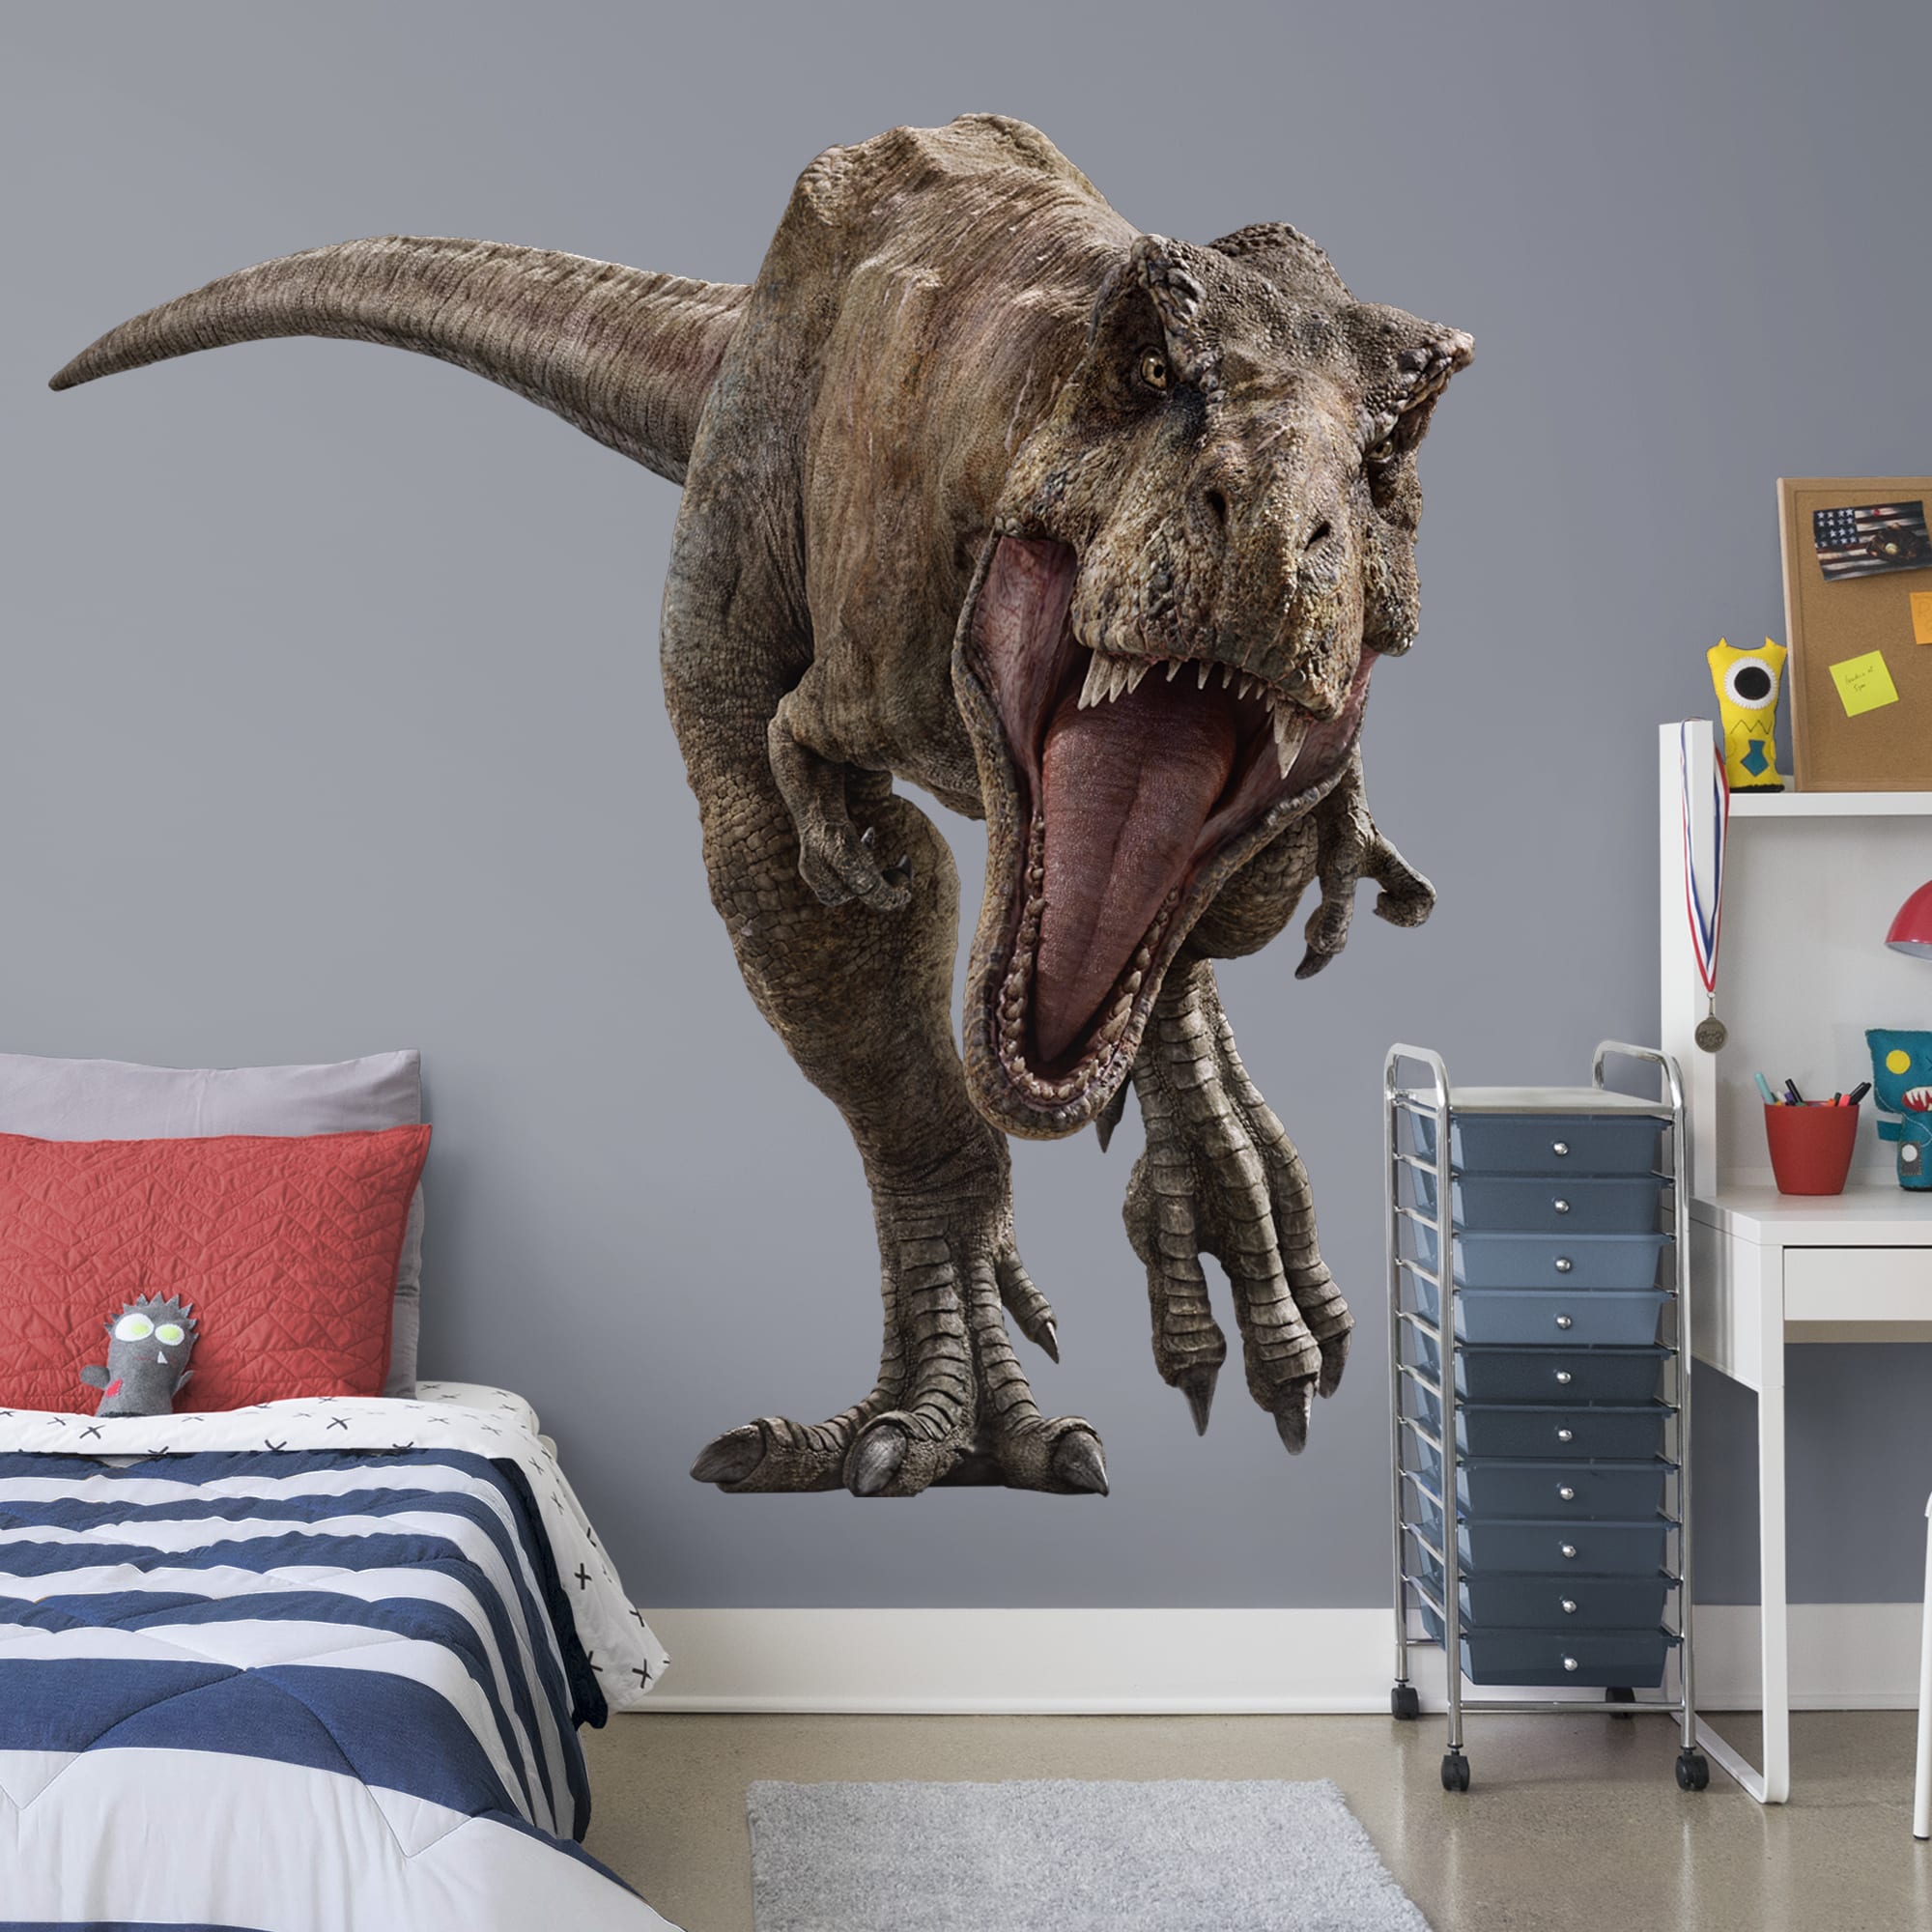  Dinosaurios Wall Decal Home Decor Roar significa I